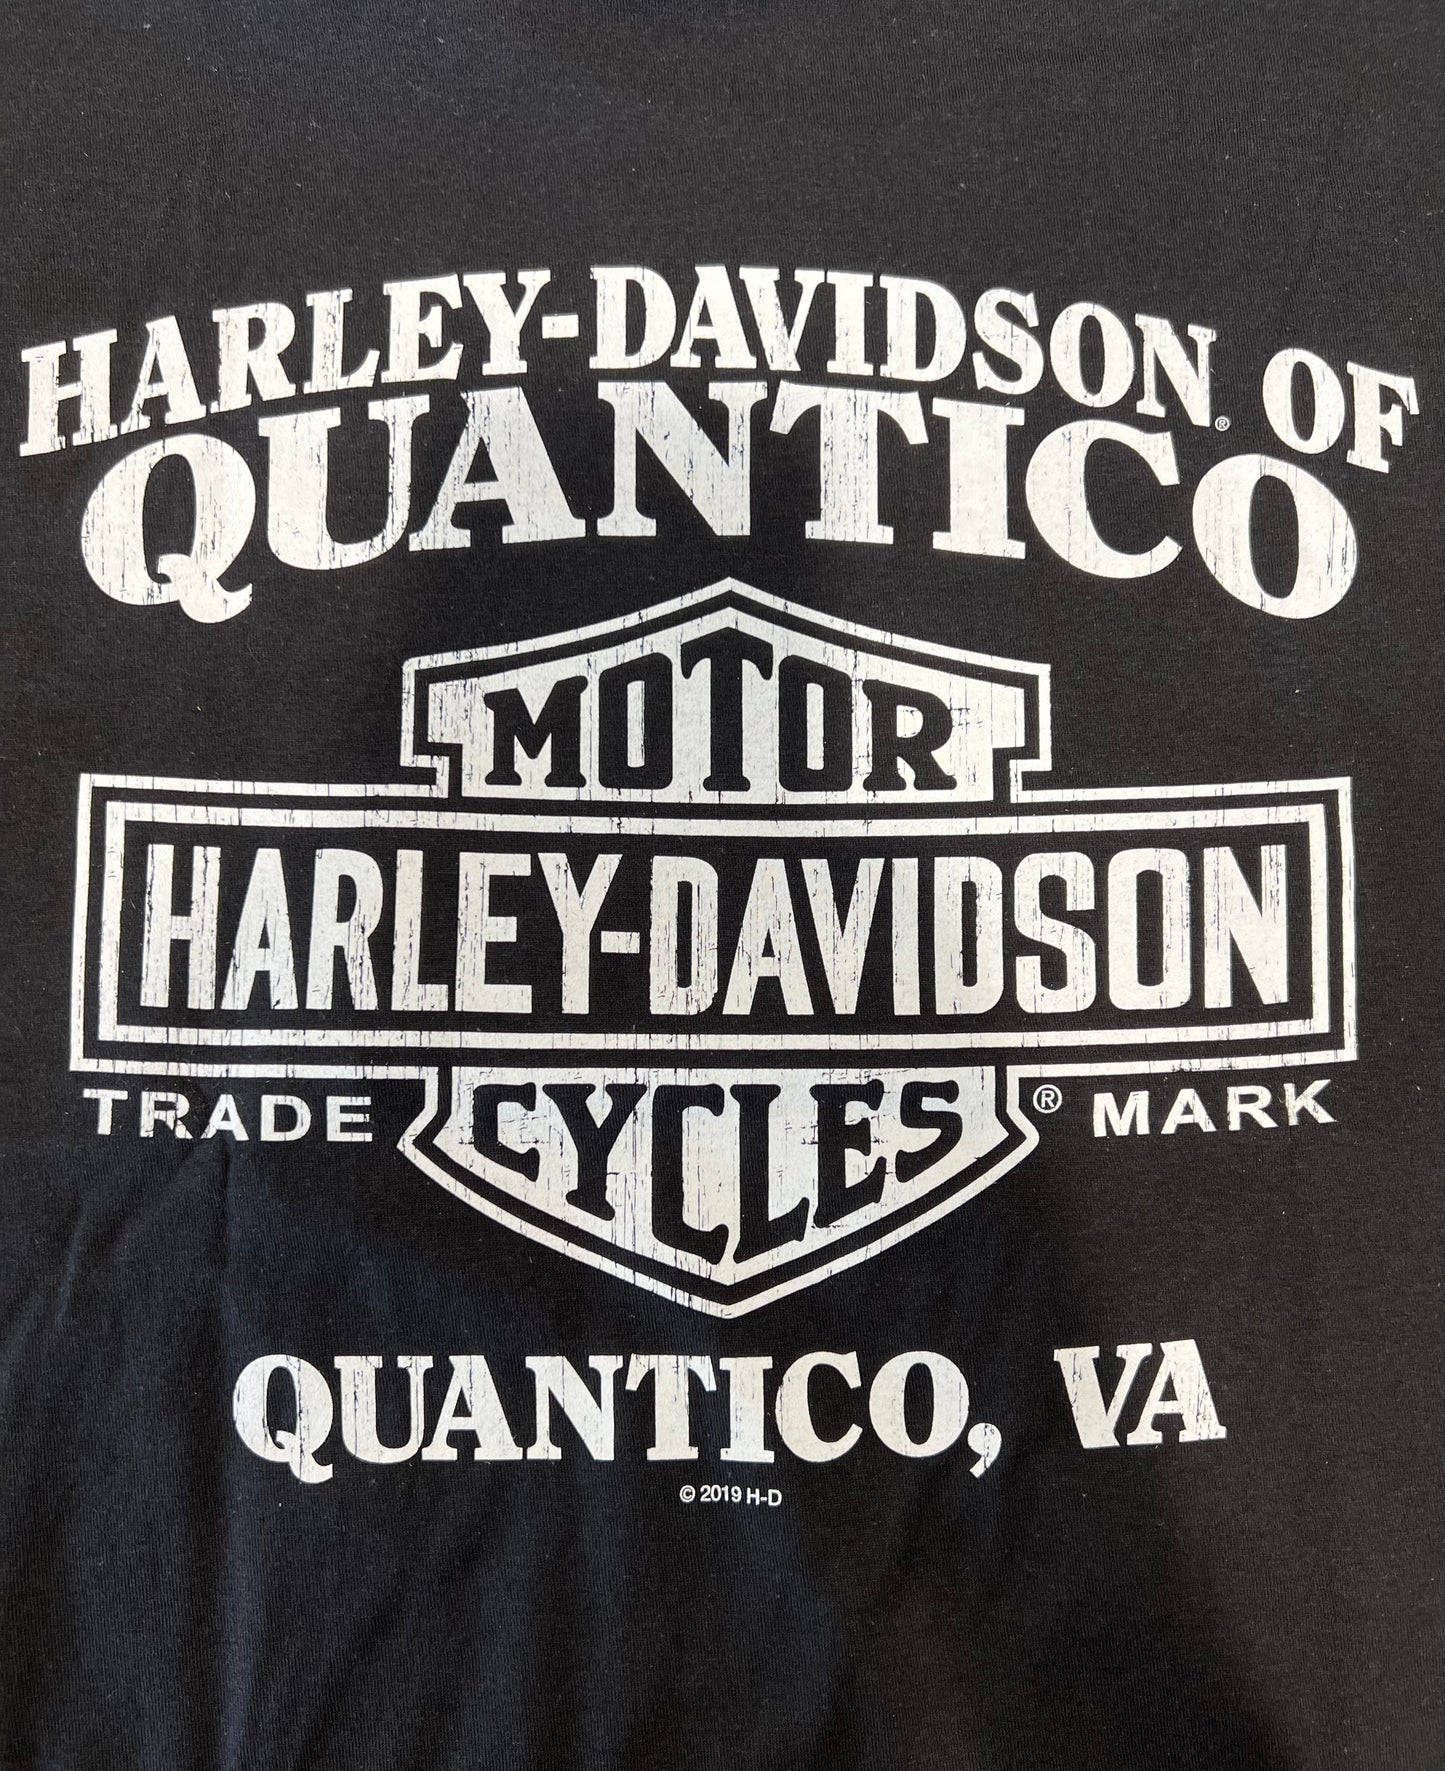 One 1 HD of Quantico Dealer Tank - Harley Davidson of Quantico